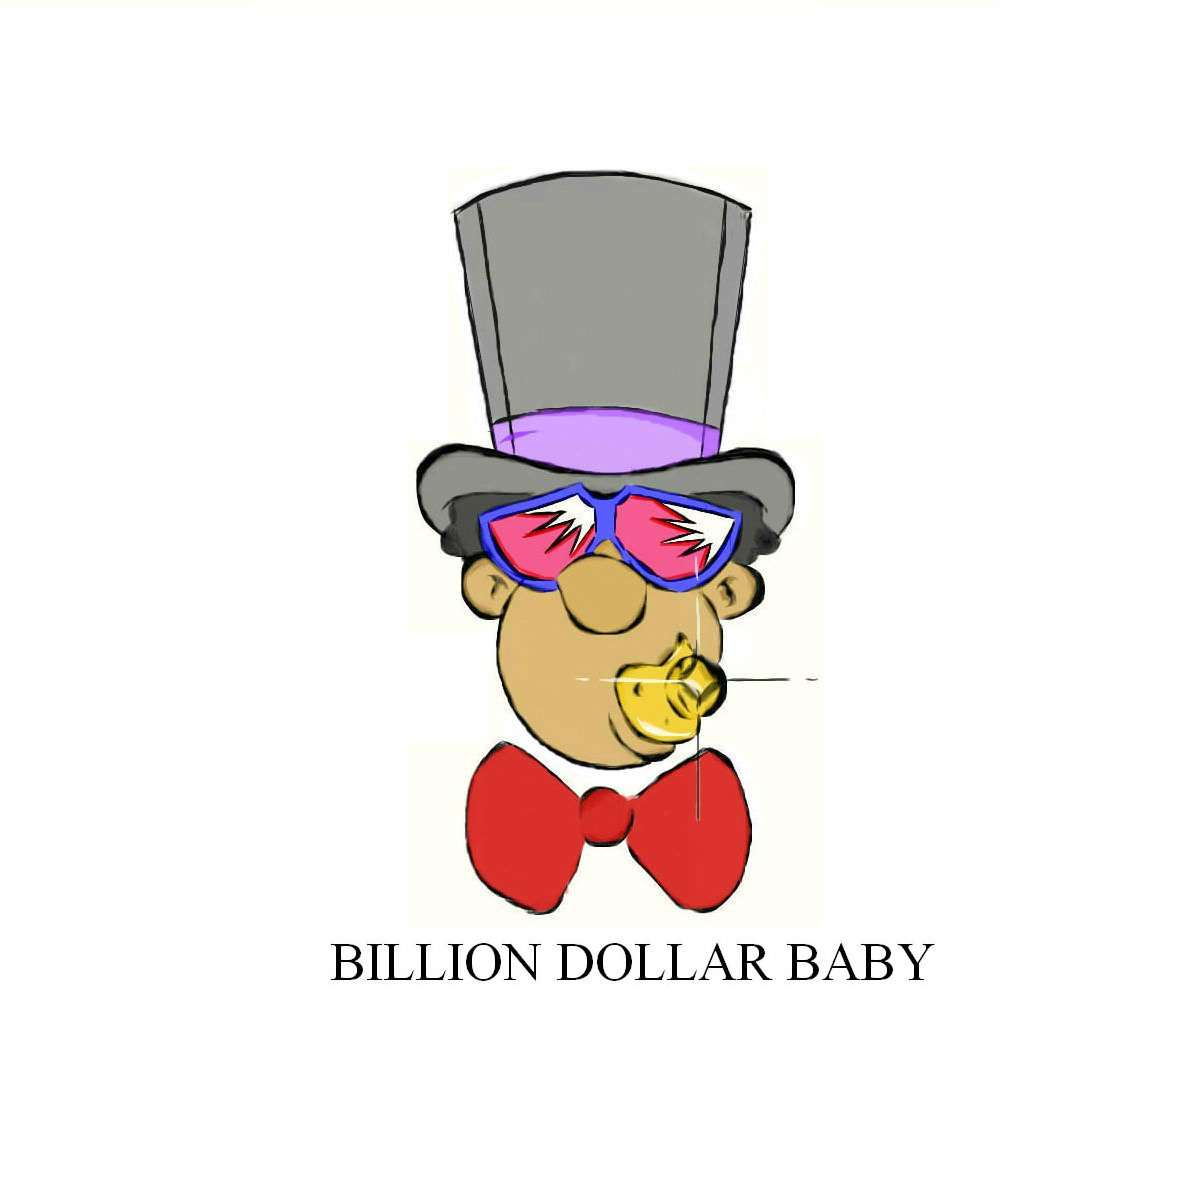  BILLION DOLLAR BABY